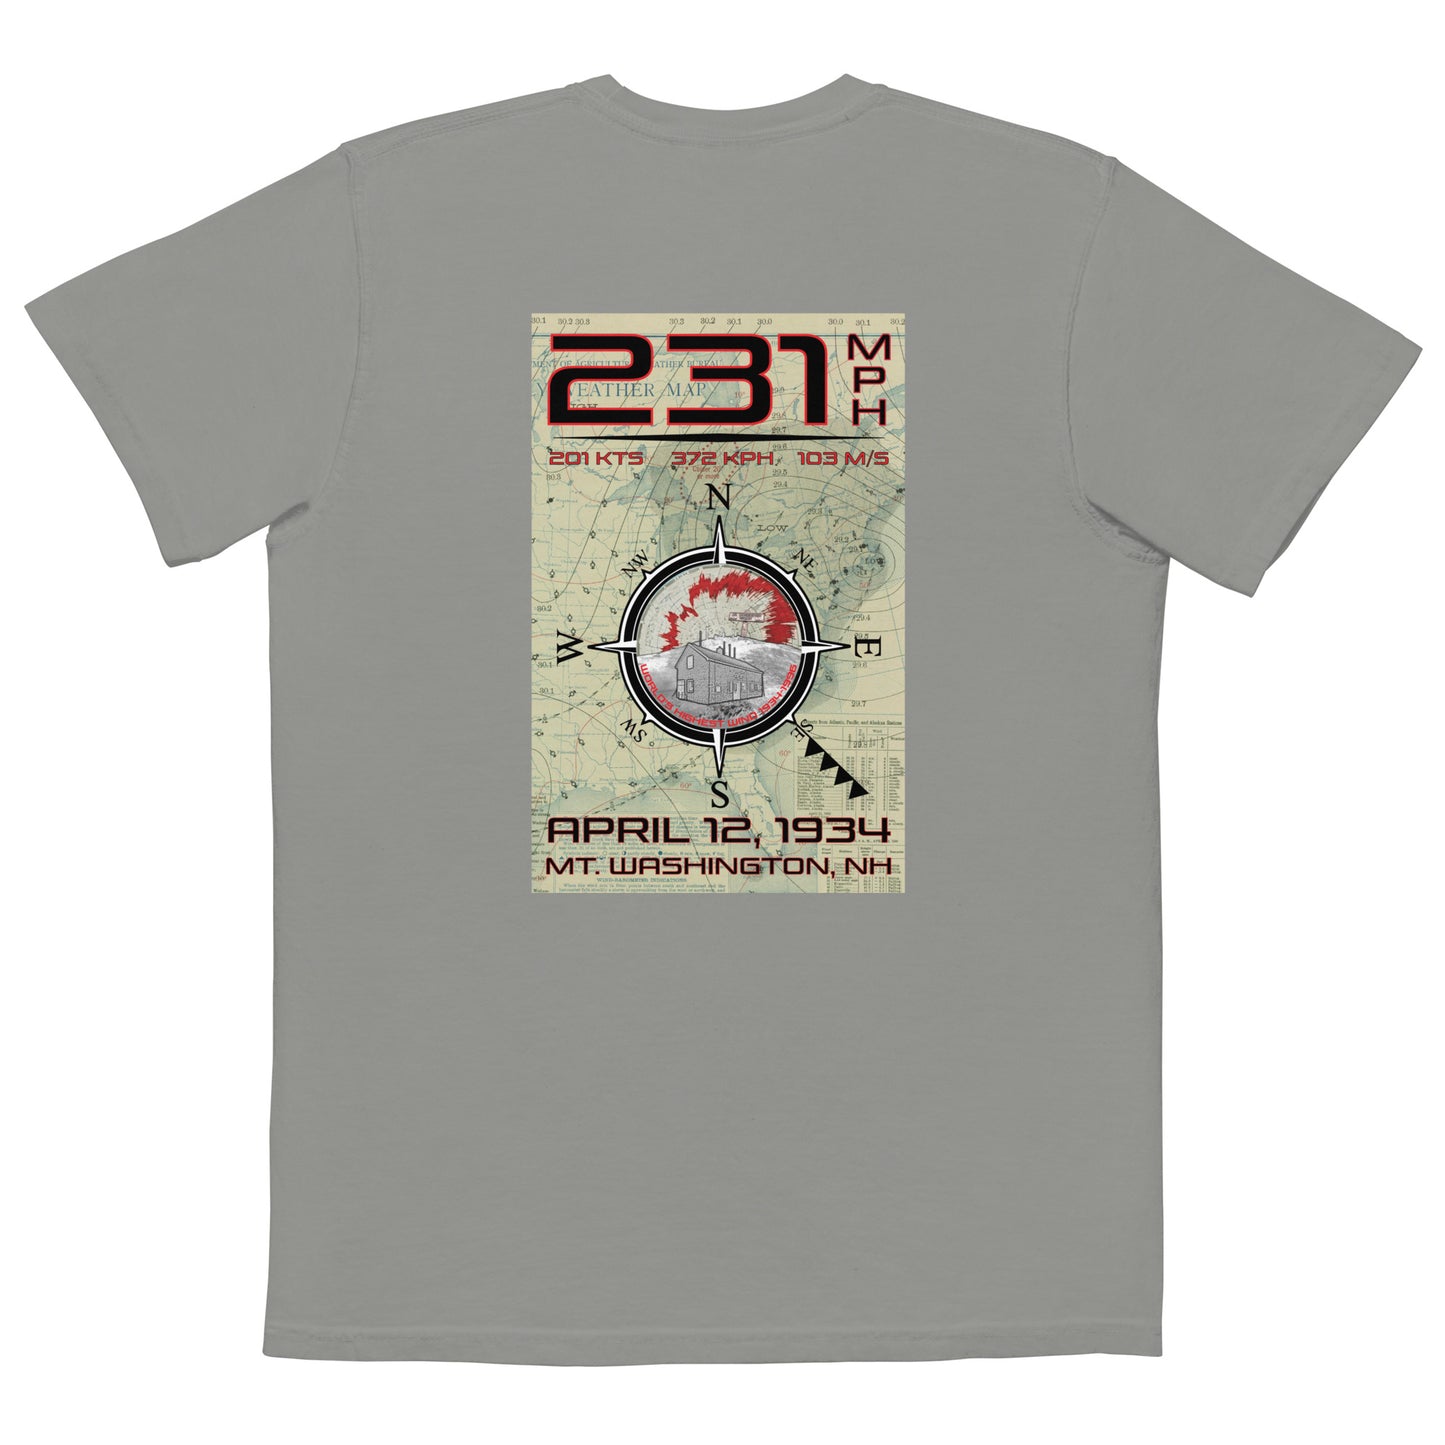 Mt Washington, NH - 231 mph Unisex pocket t-shirt